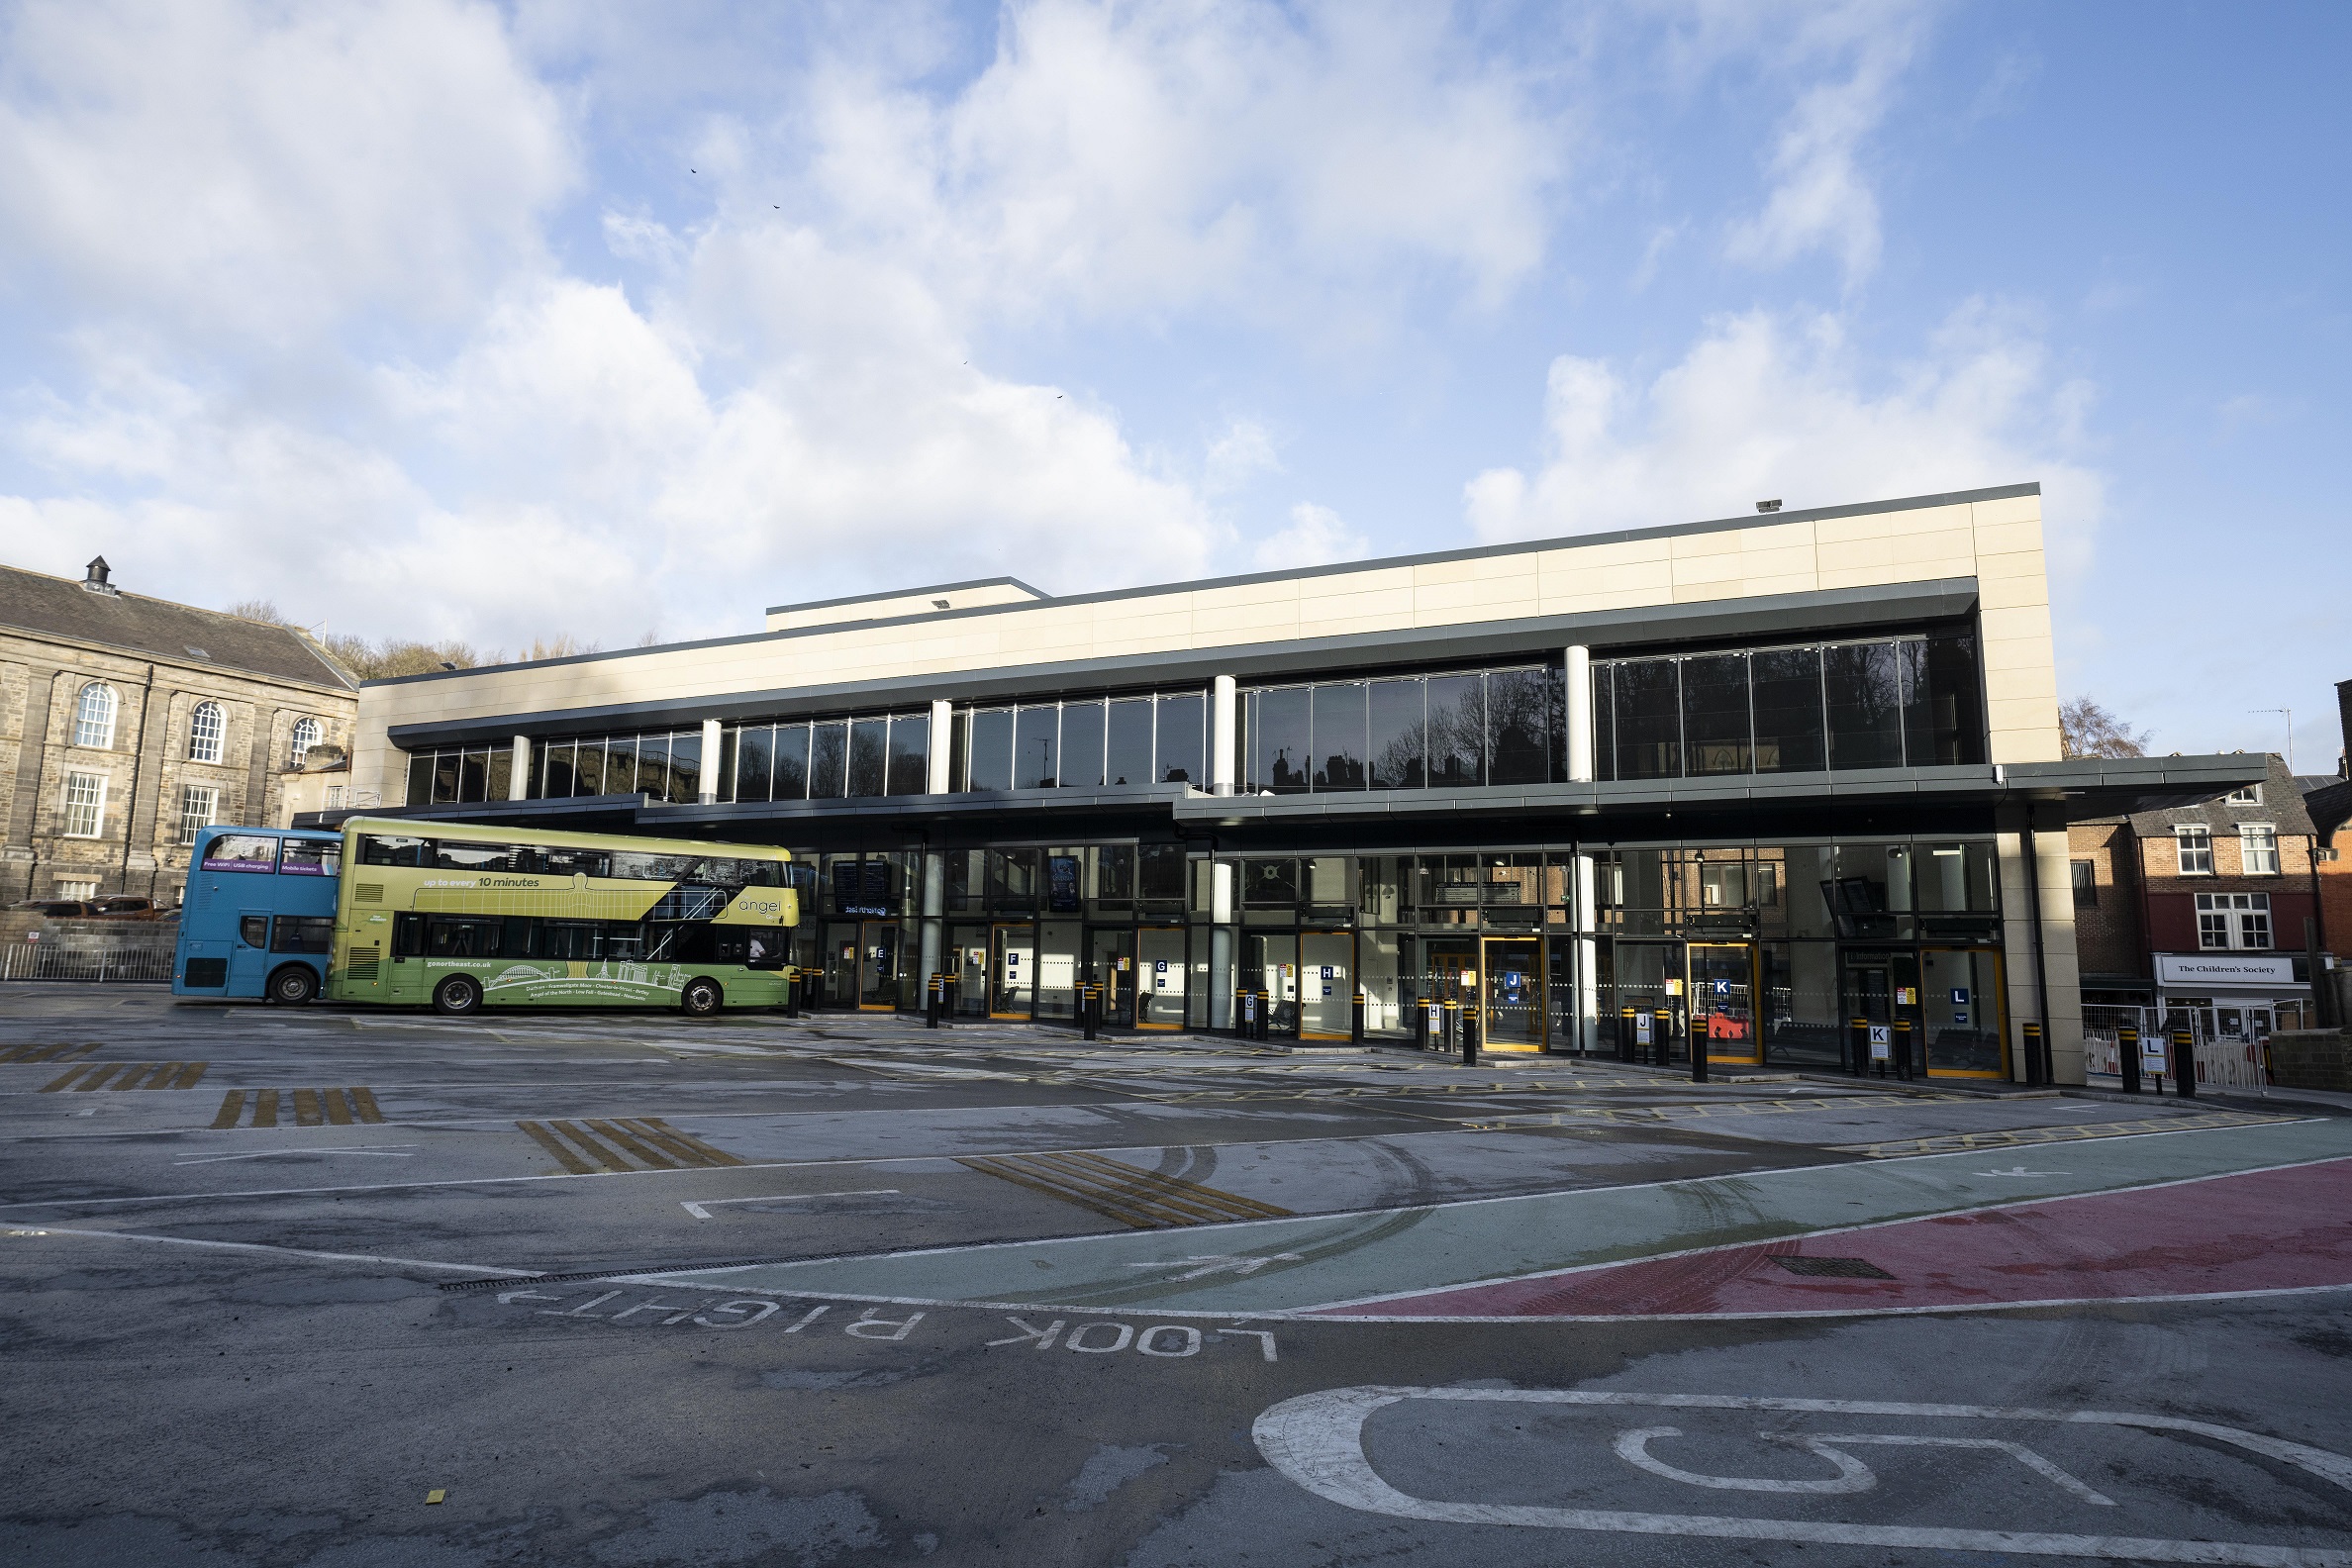 Durham City Bus Station